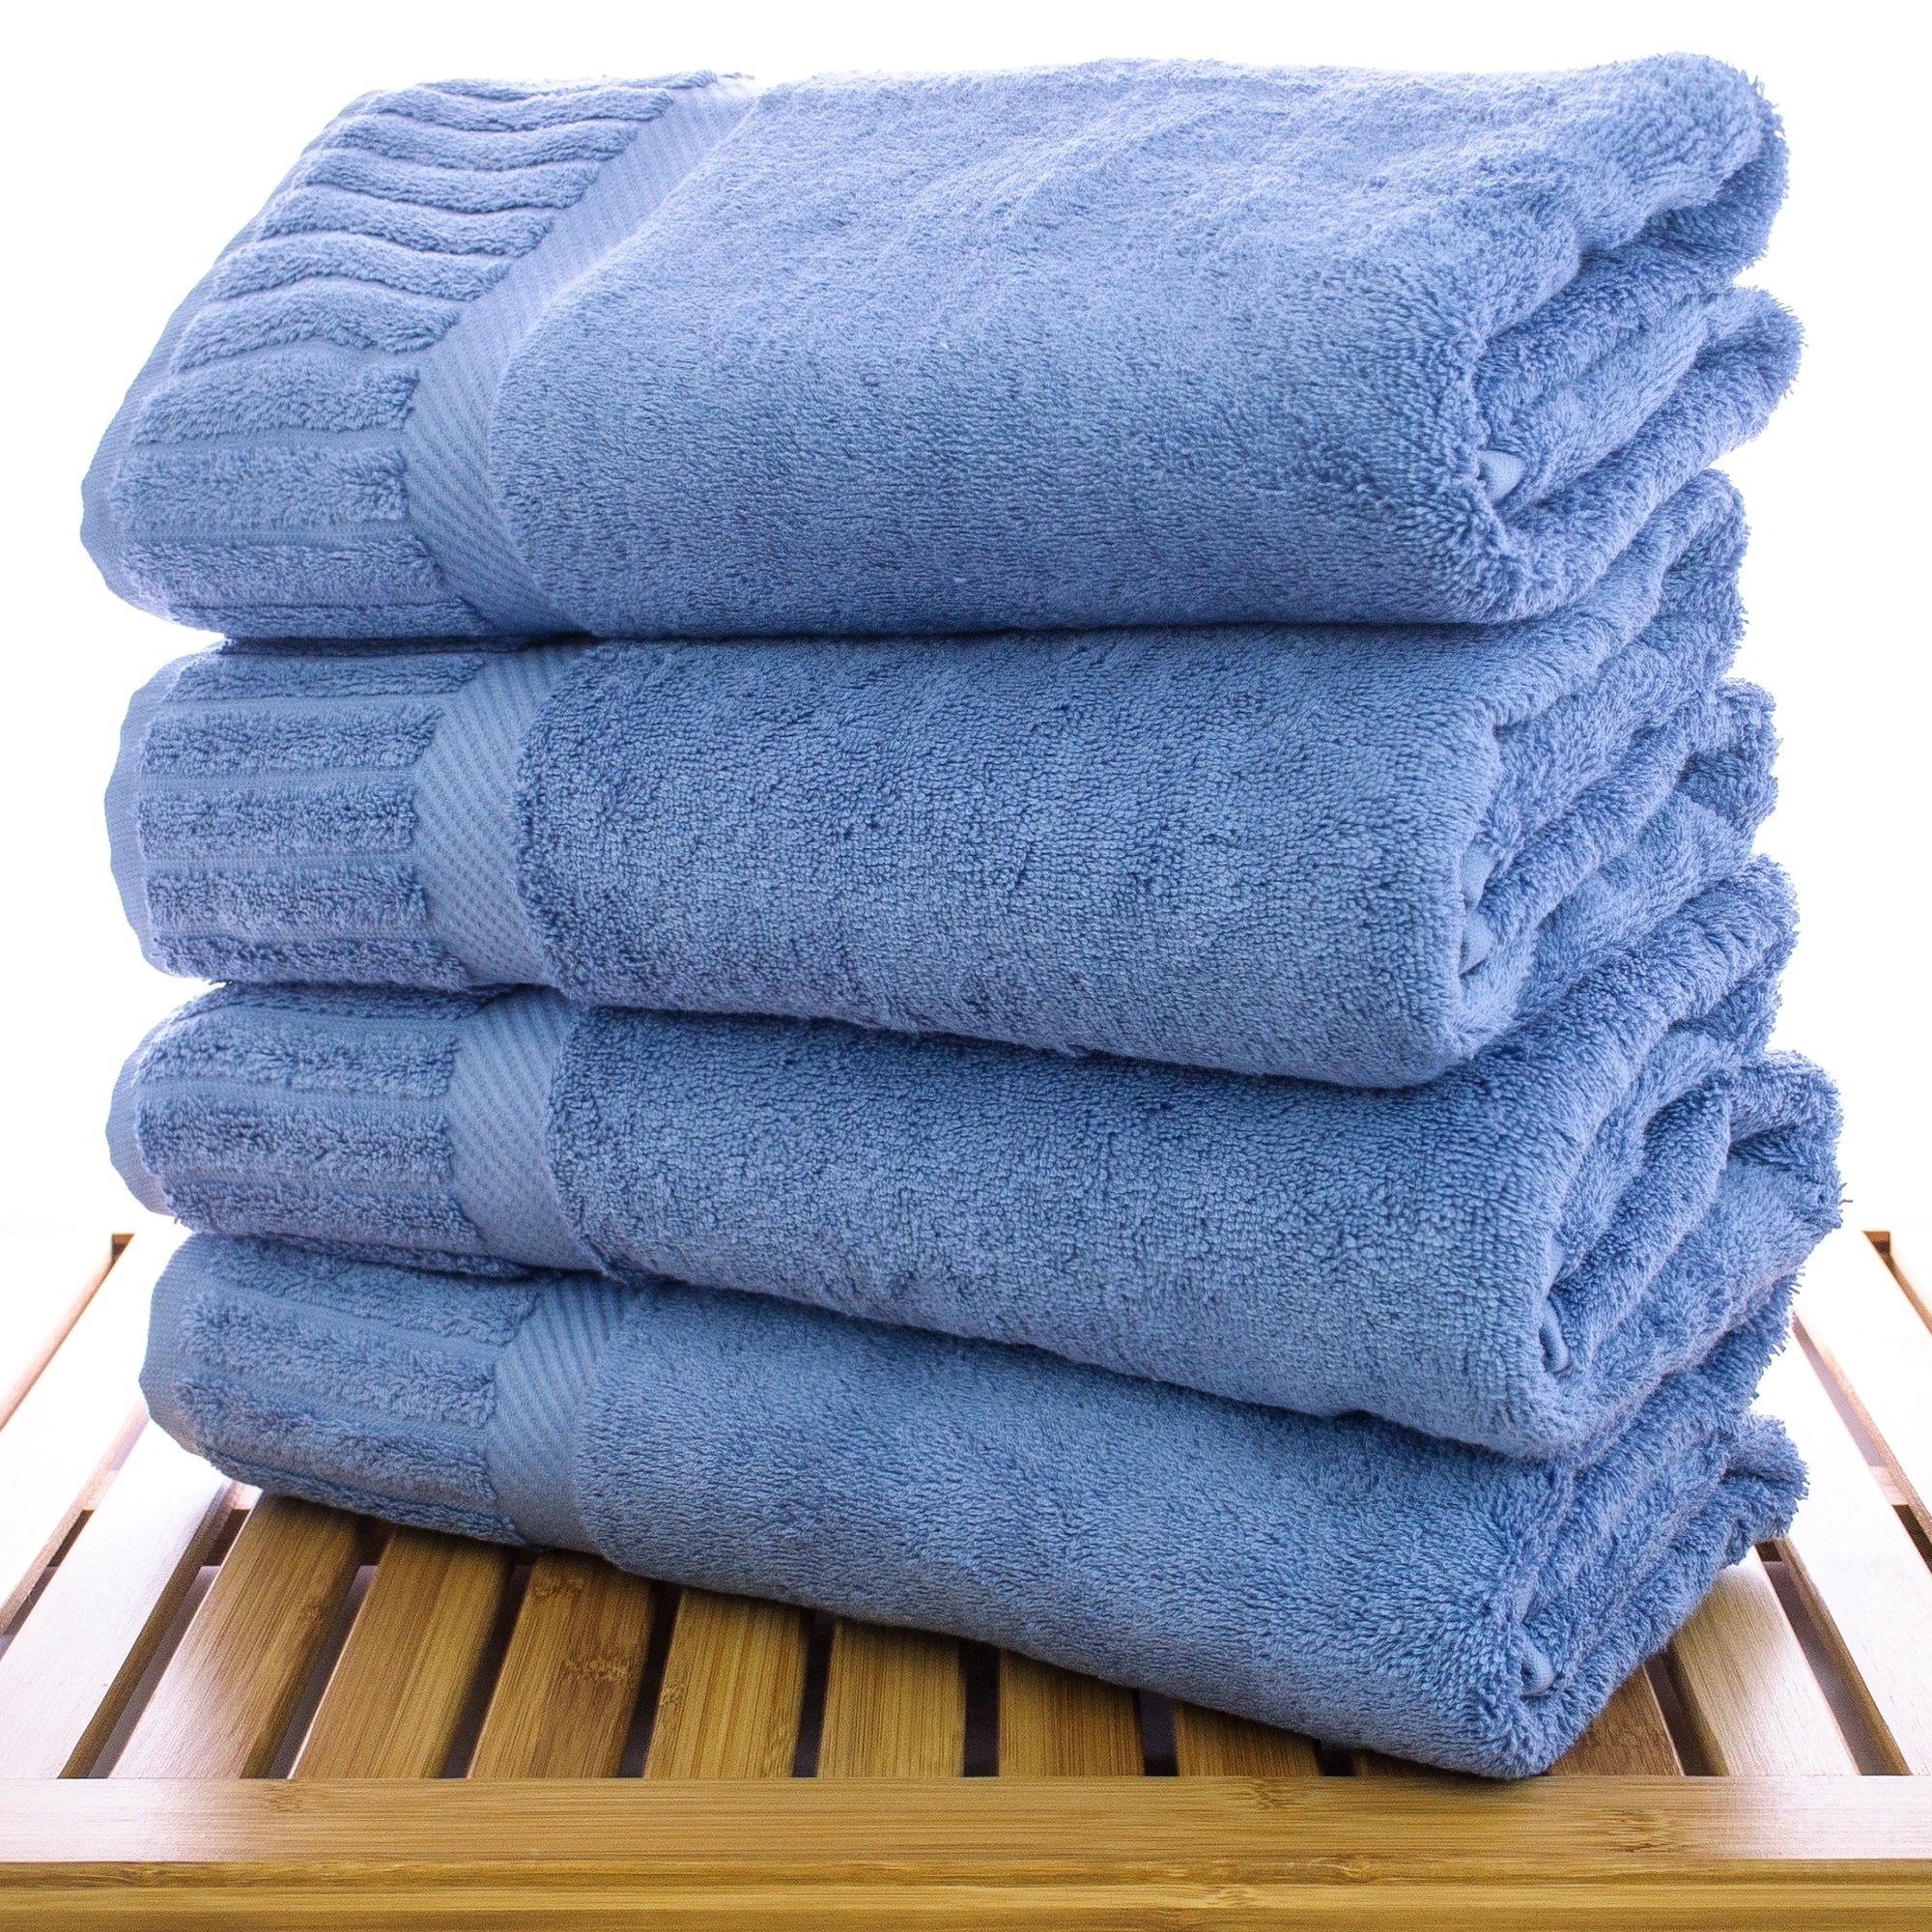 Set of 4 Aqua Blue Luxury Hotel & Spa Bath Towel 100% Genuine Turkish Cotton